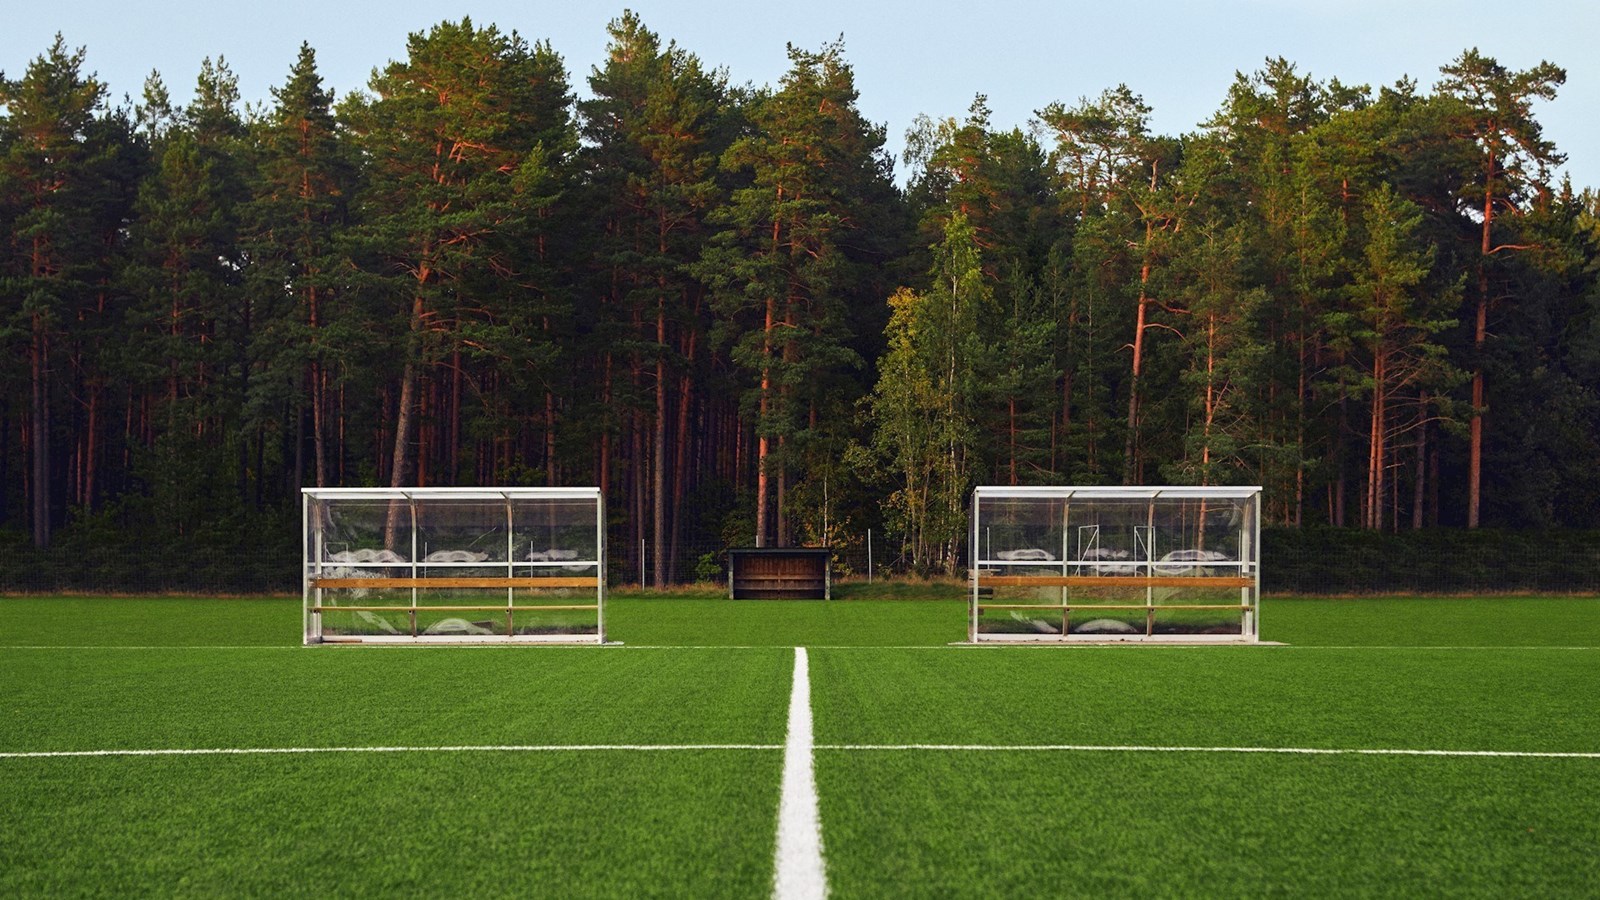 DBU: Investér i fodboldfaciliteter nu